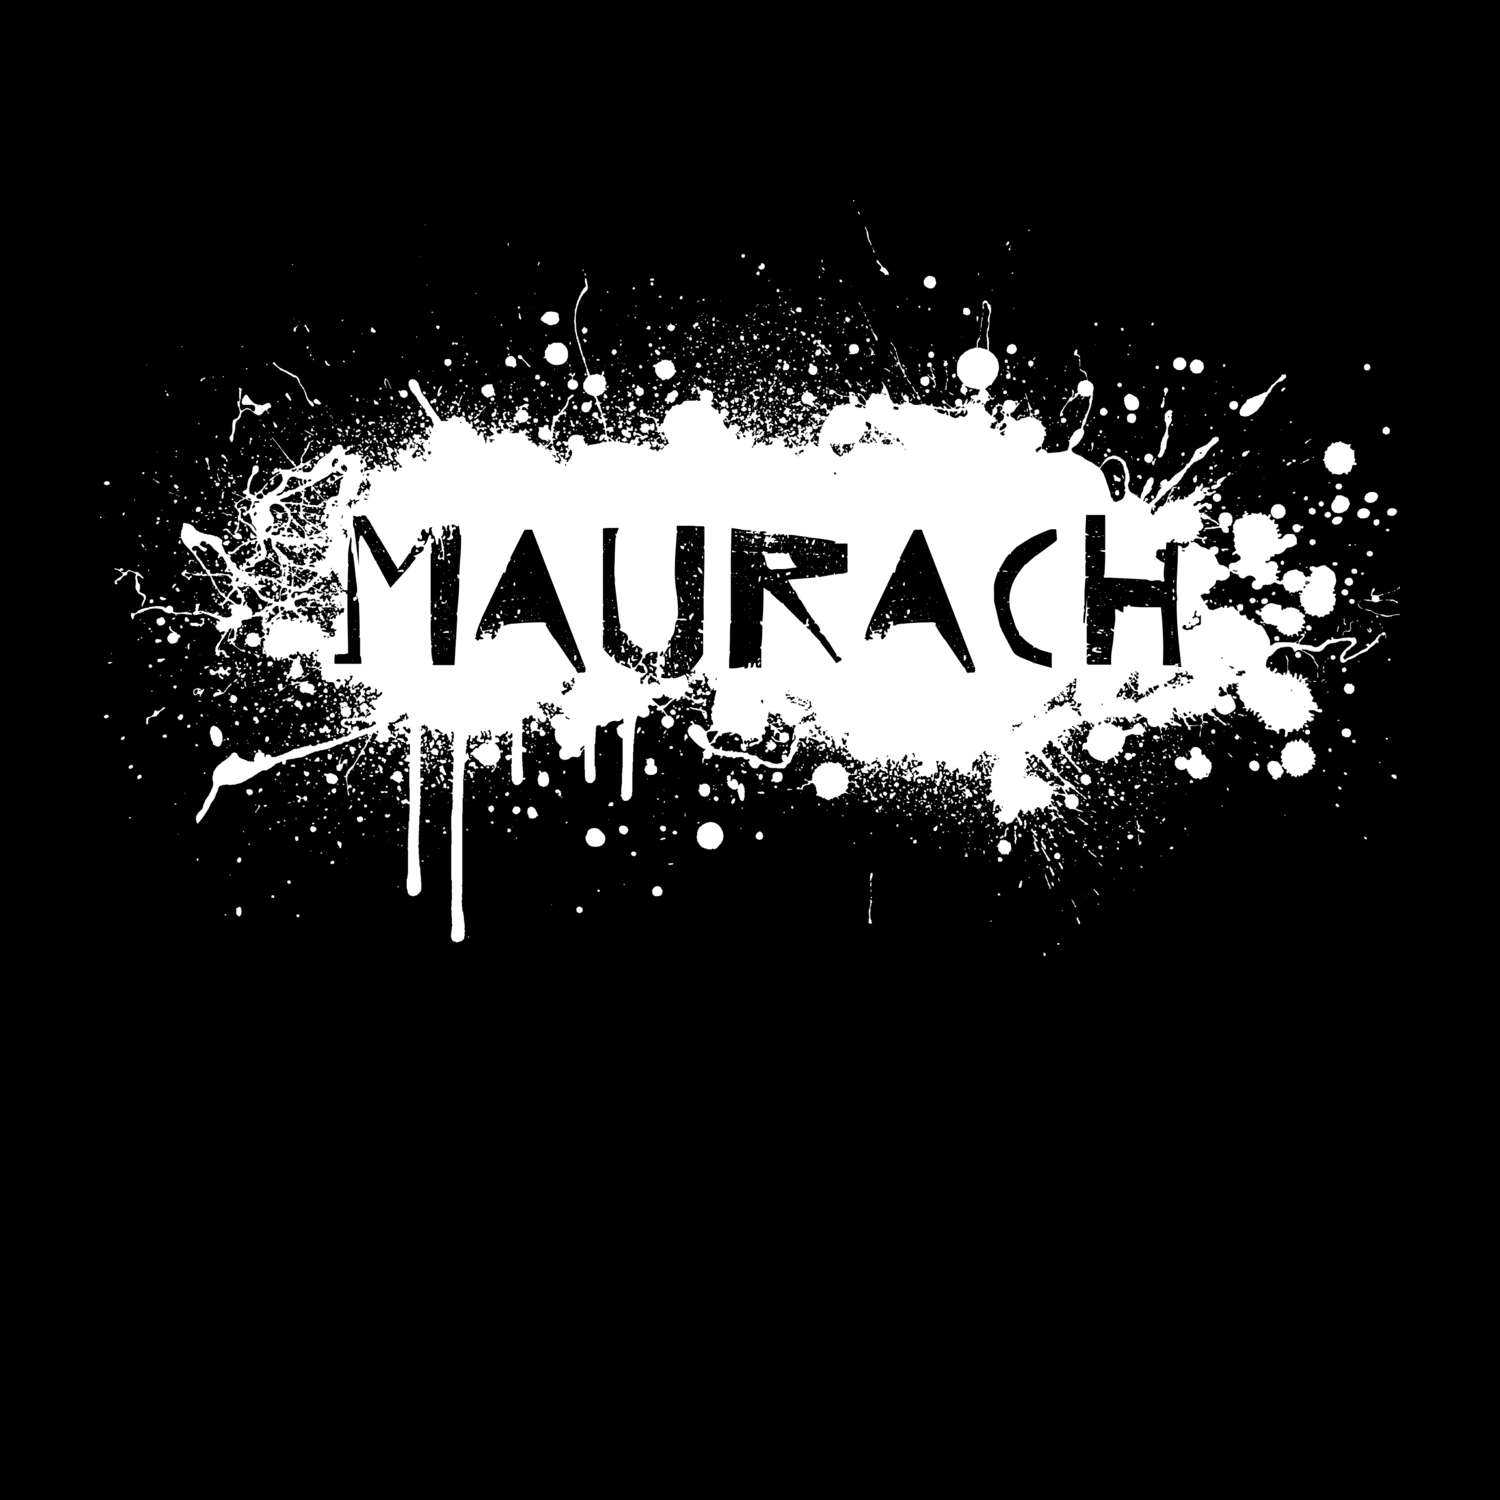 Maurach T-Shirt »Paint Splash Punk«